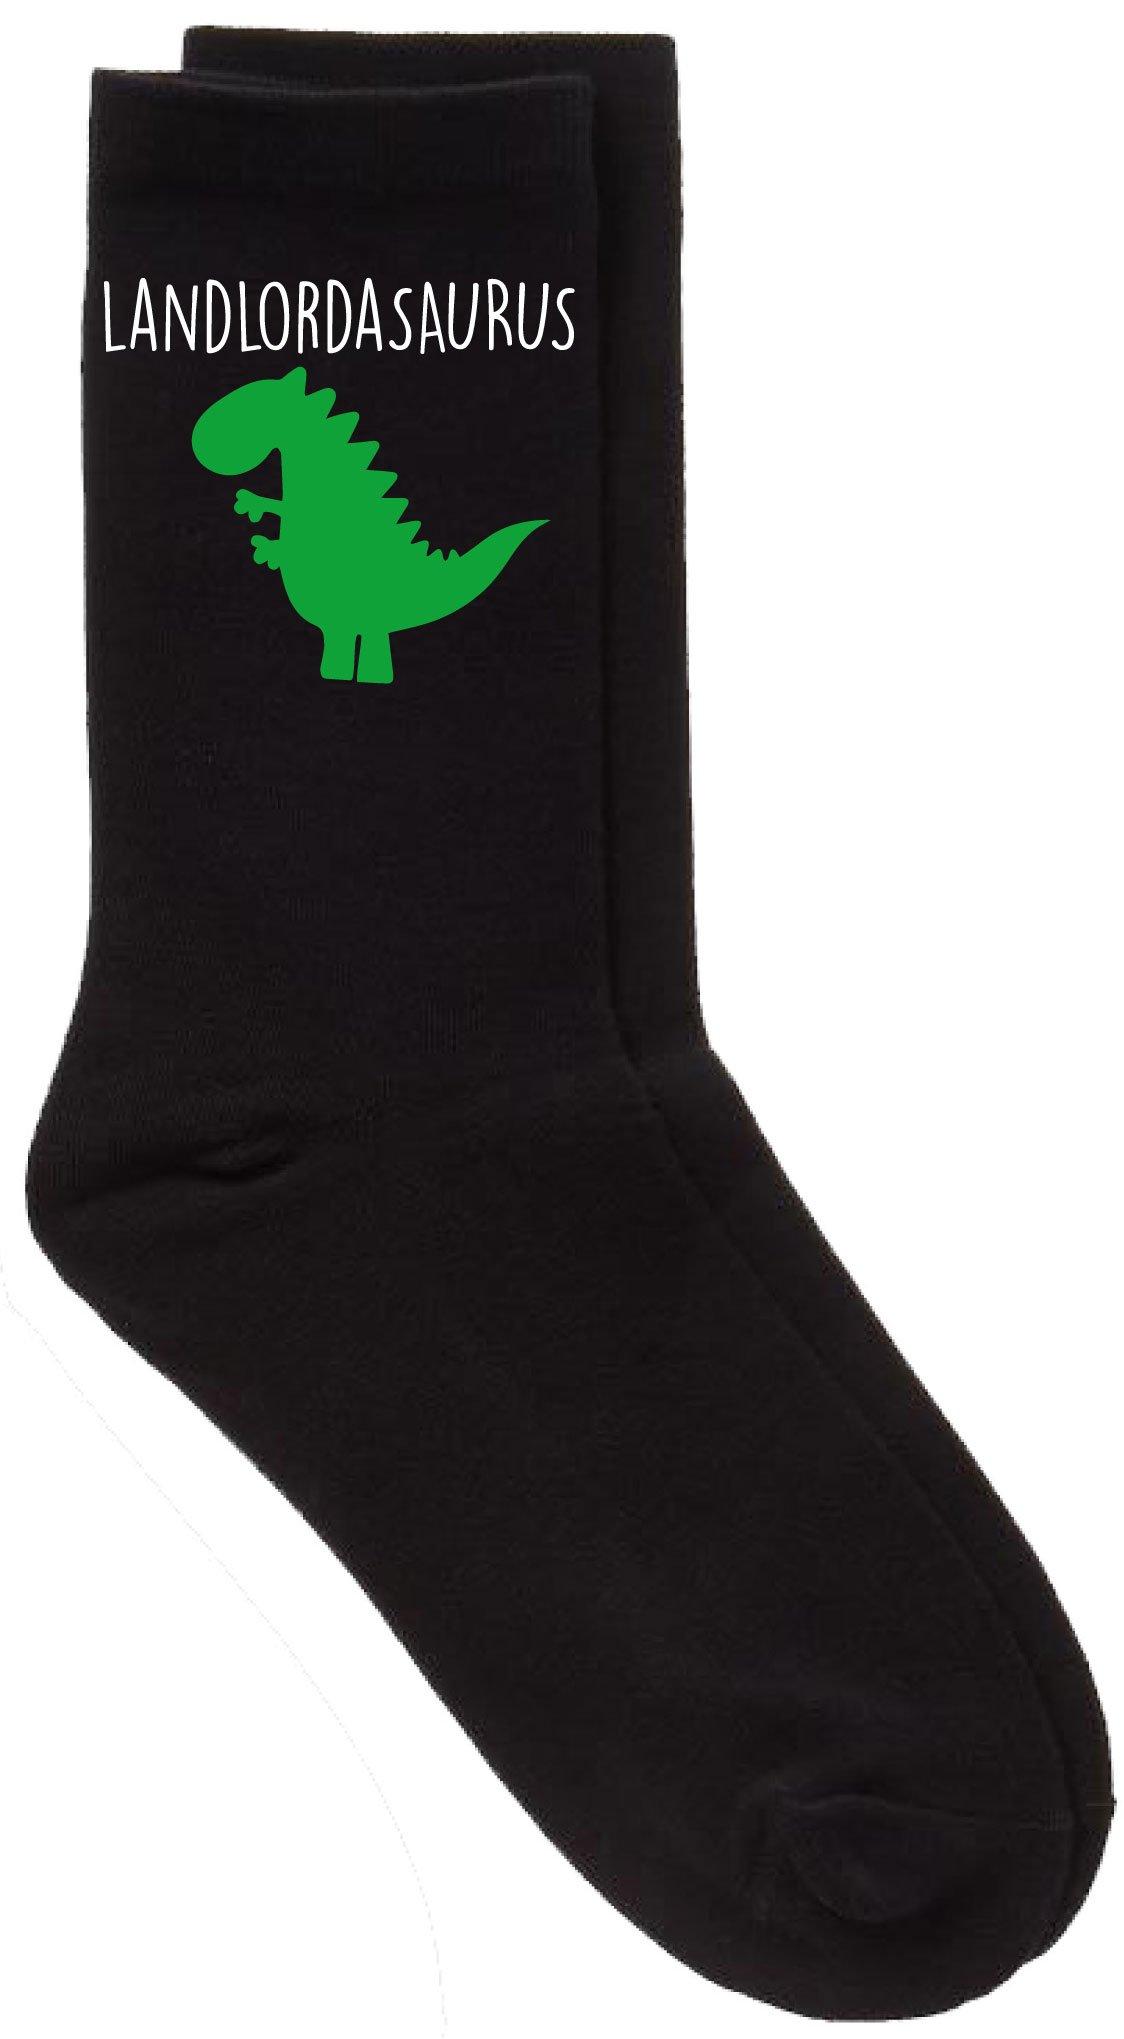 Landlord Dinosaur Landlordasaurus Black Calf Socks